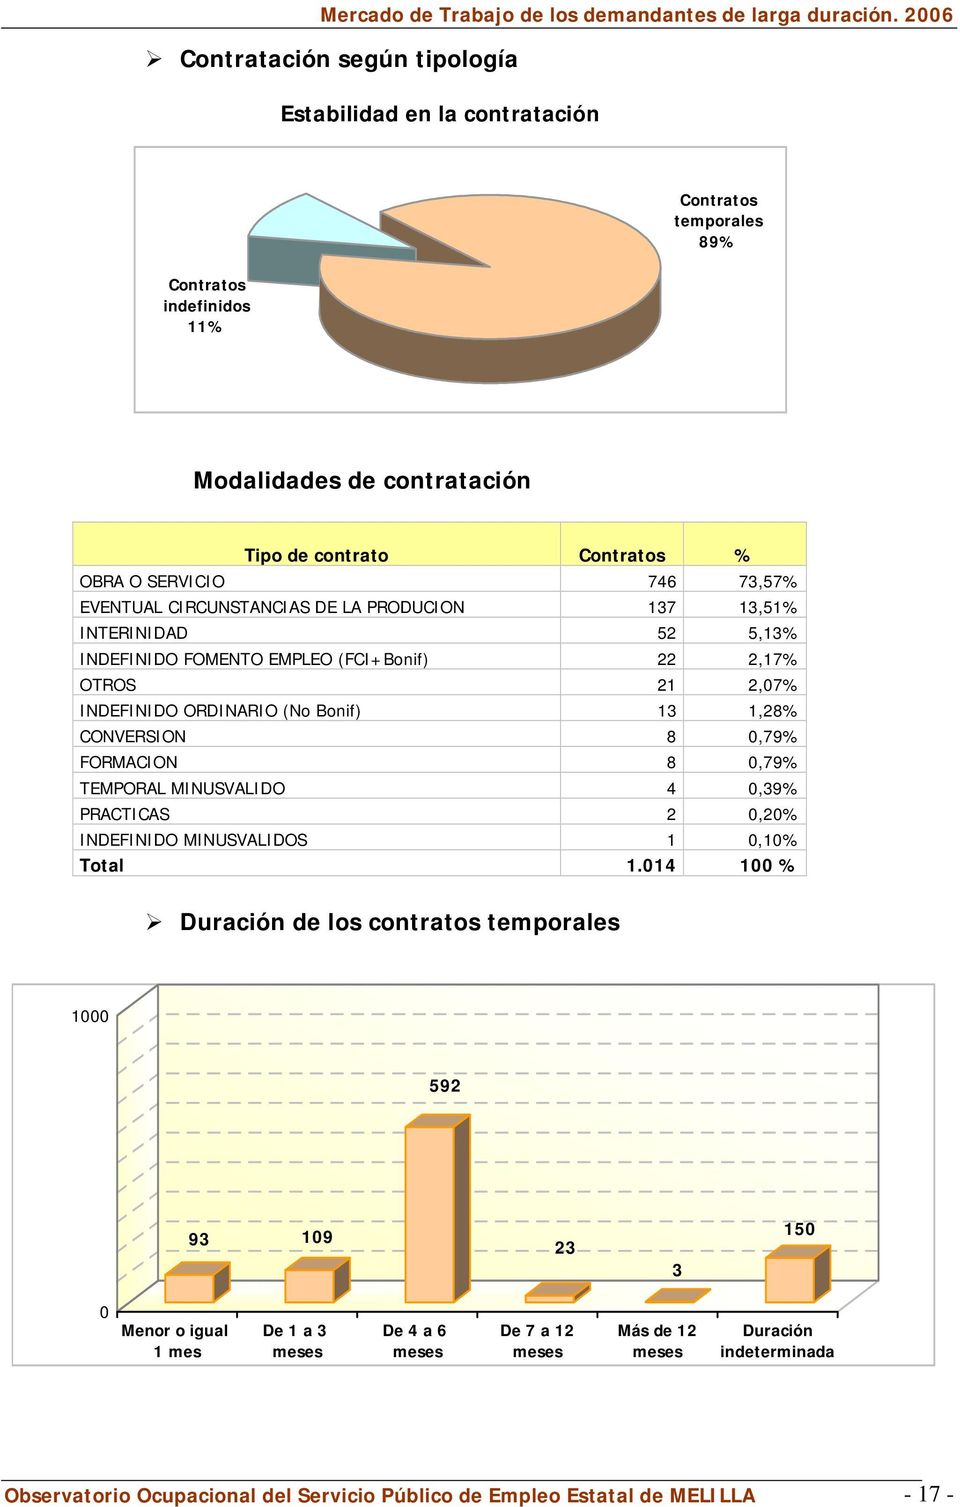 CONVERSION 8 0,79% FORMACION 8 0,79% TEMPORAL MINUSVALIDO 4 0,39% PRACTICAS 2 0,20% INDEFINIDO MINUSVALIDOS 1 0,10% Total 1.